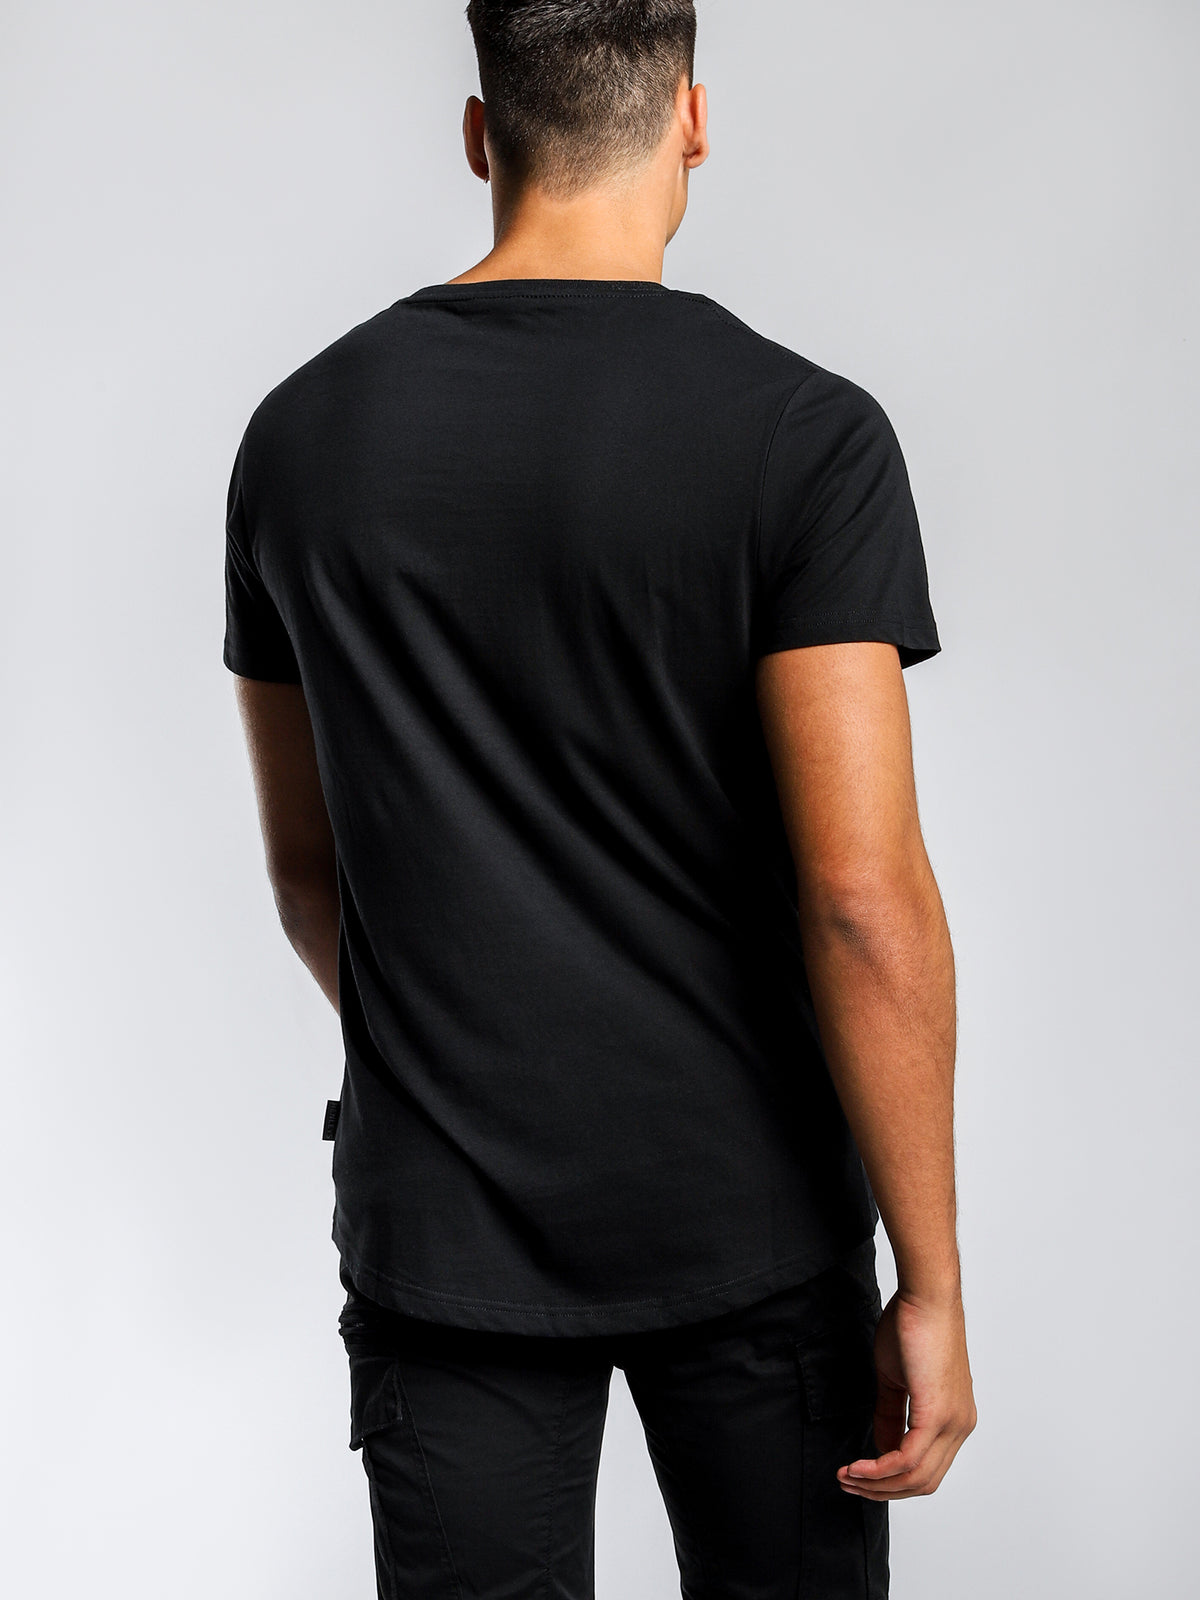 Redwood T-Shirt in Black